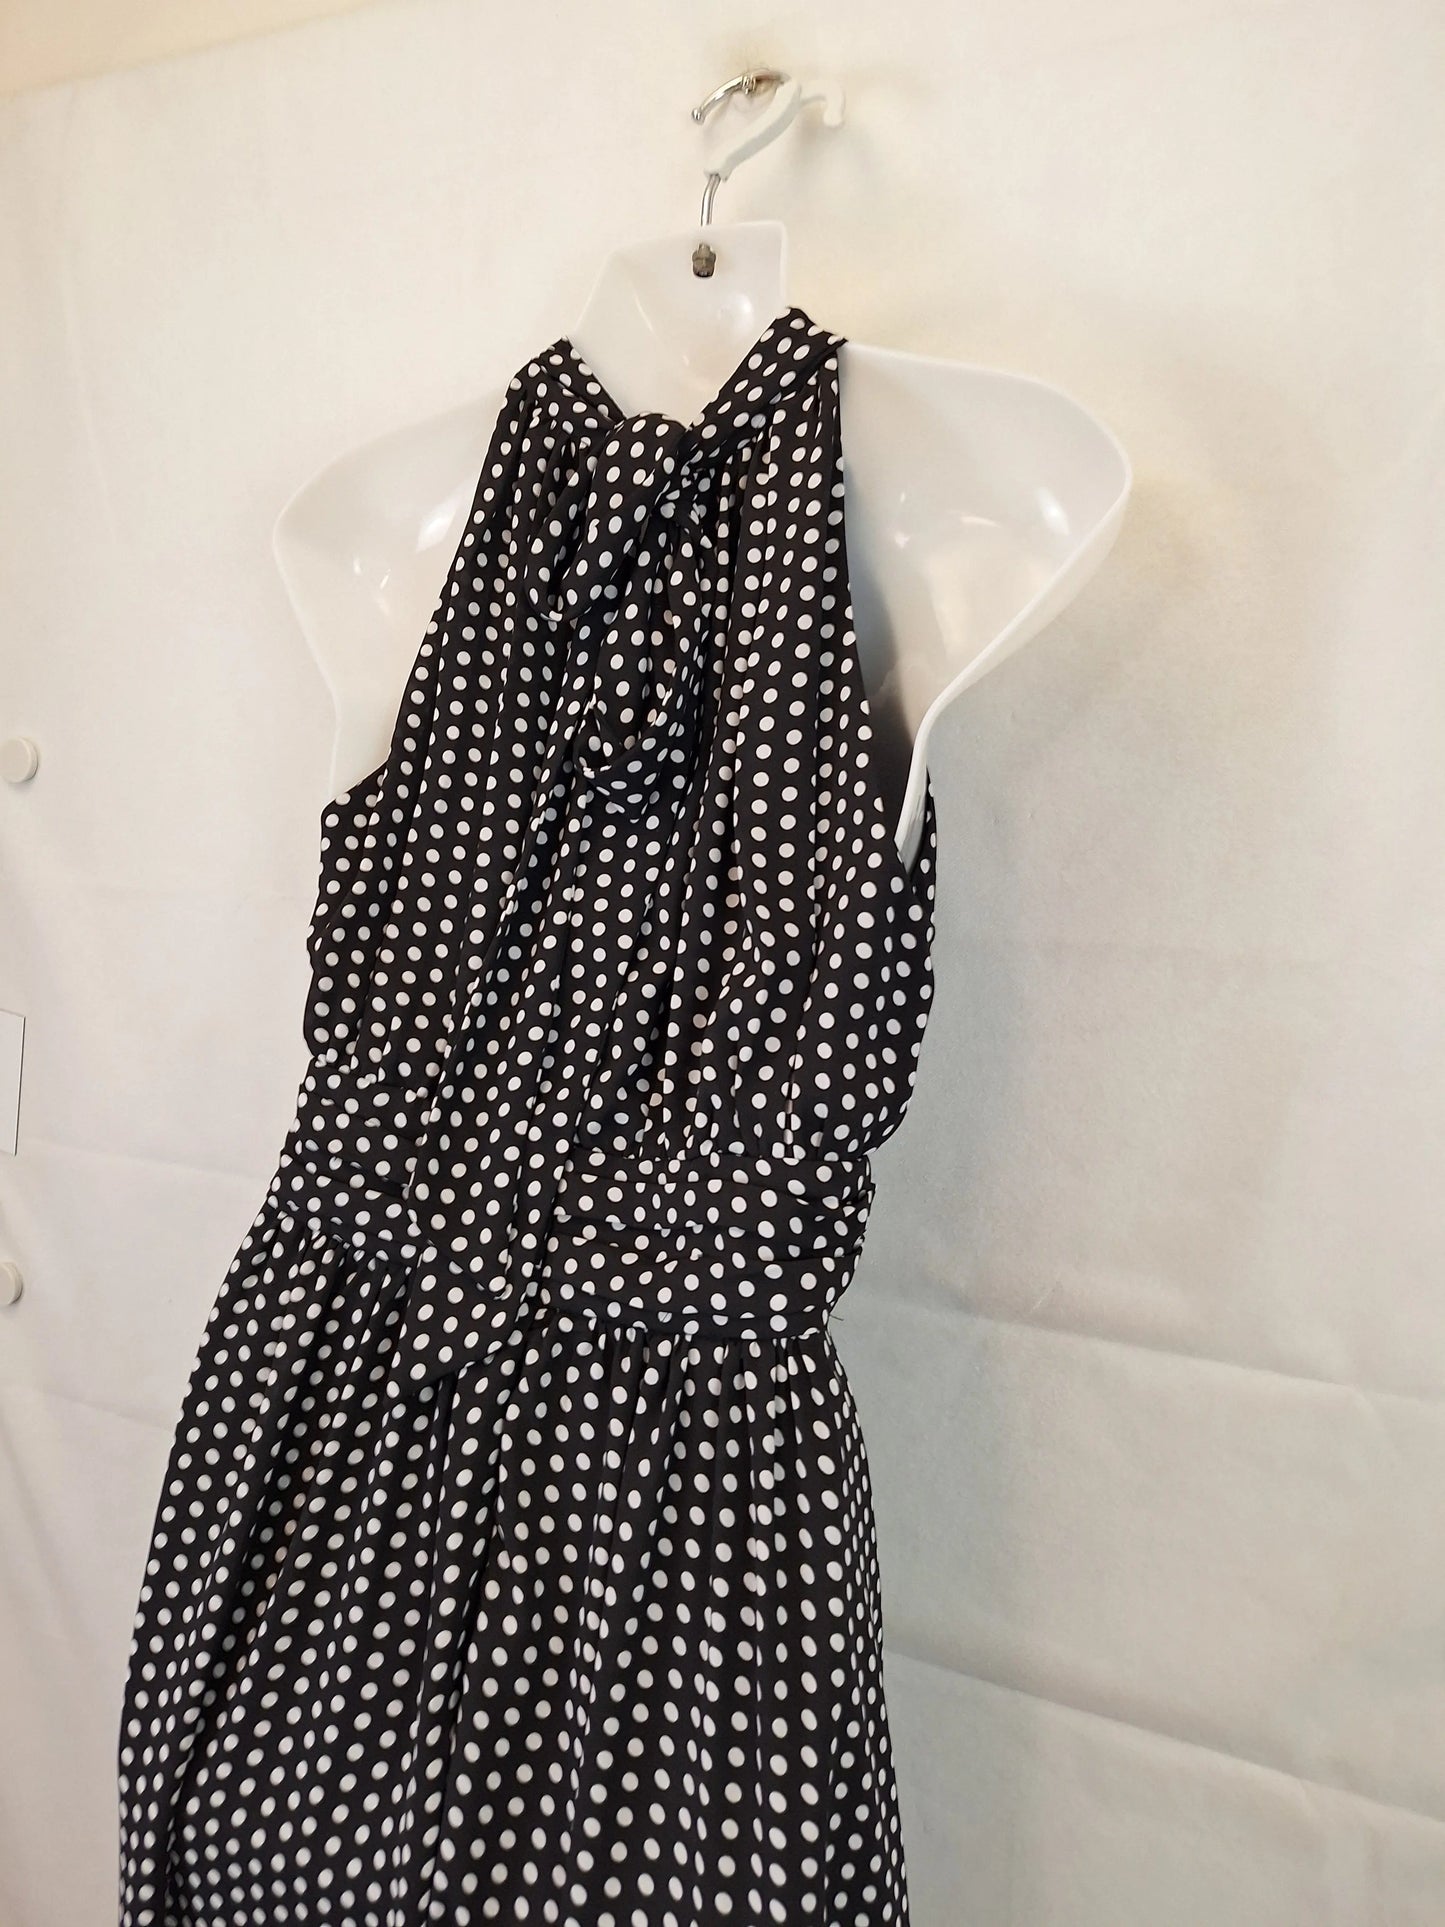 Portmans Flirty High Neck Mini Dress Size 8 by SwapUp-Online Second Hand Store-Online Thrift Store